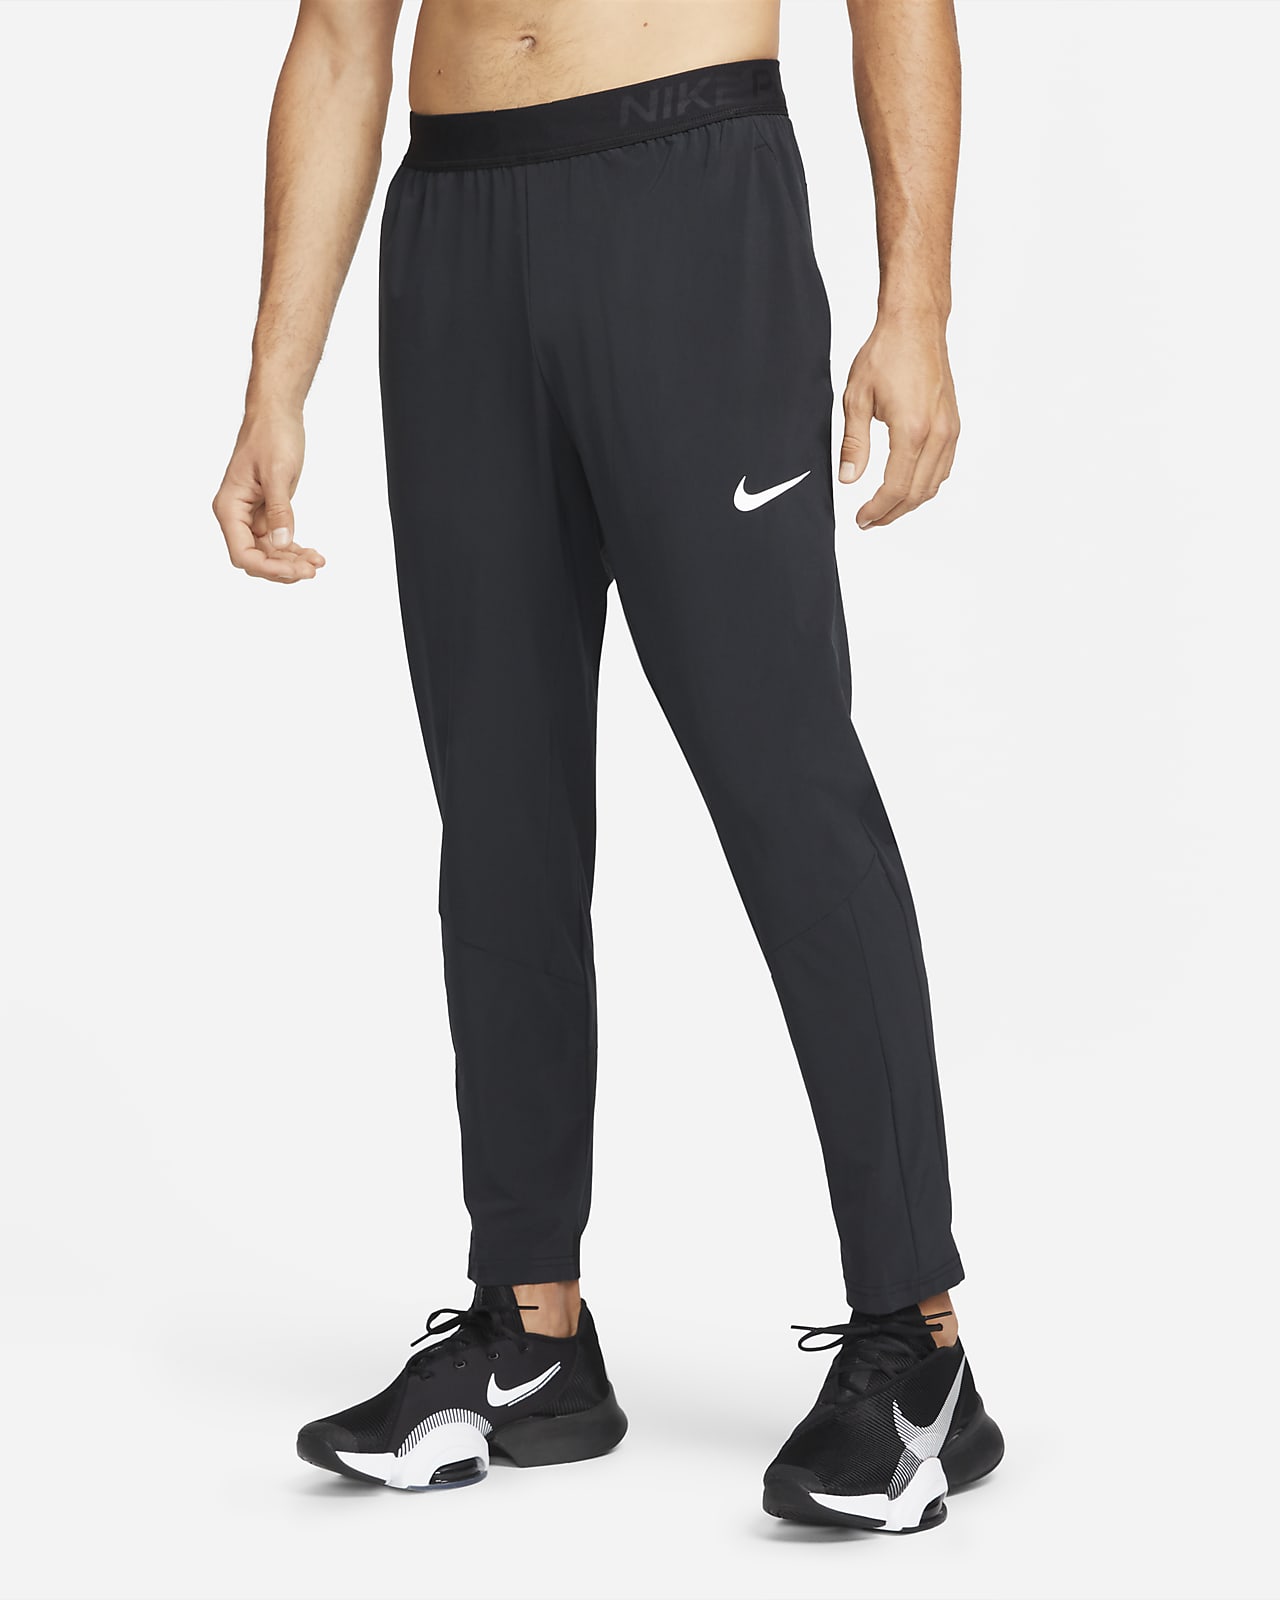 Pantalones entrenamiento para hombre Pro Dri-FIT Max. Nike.com